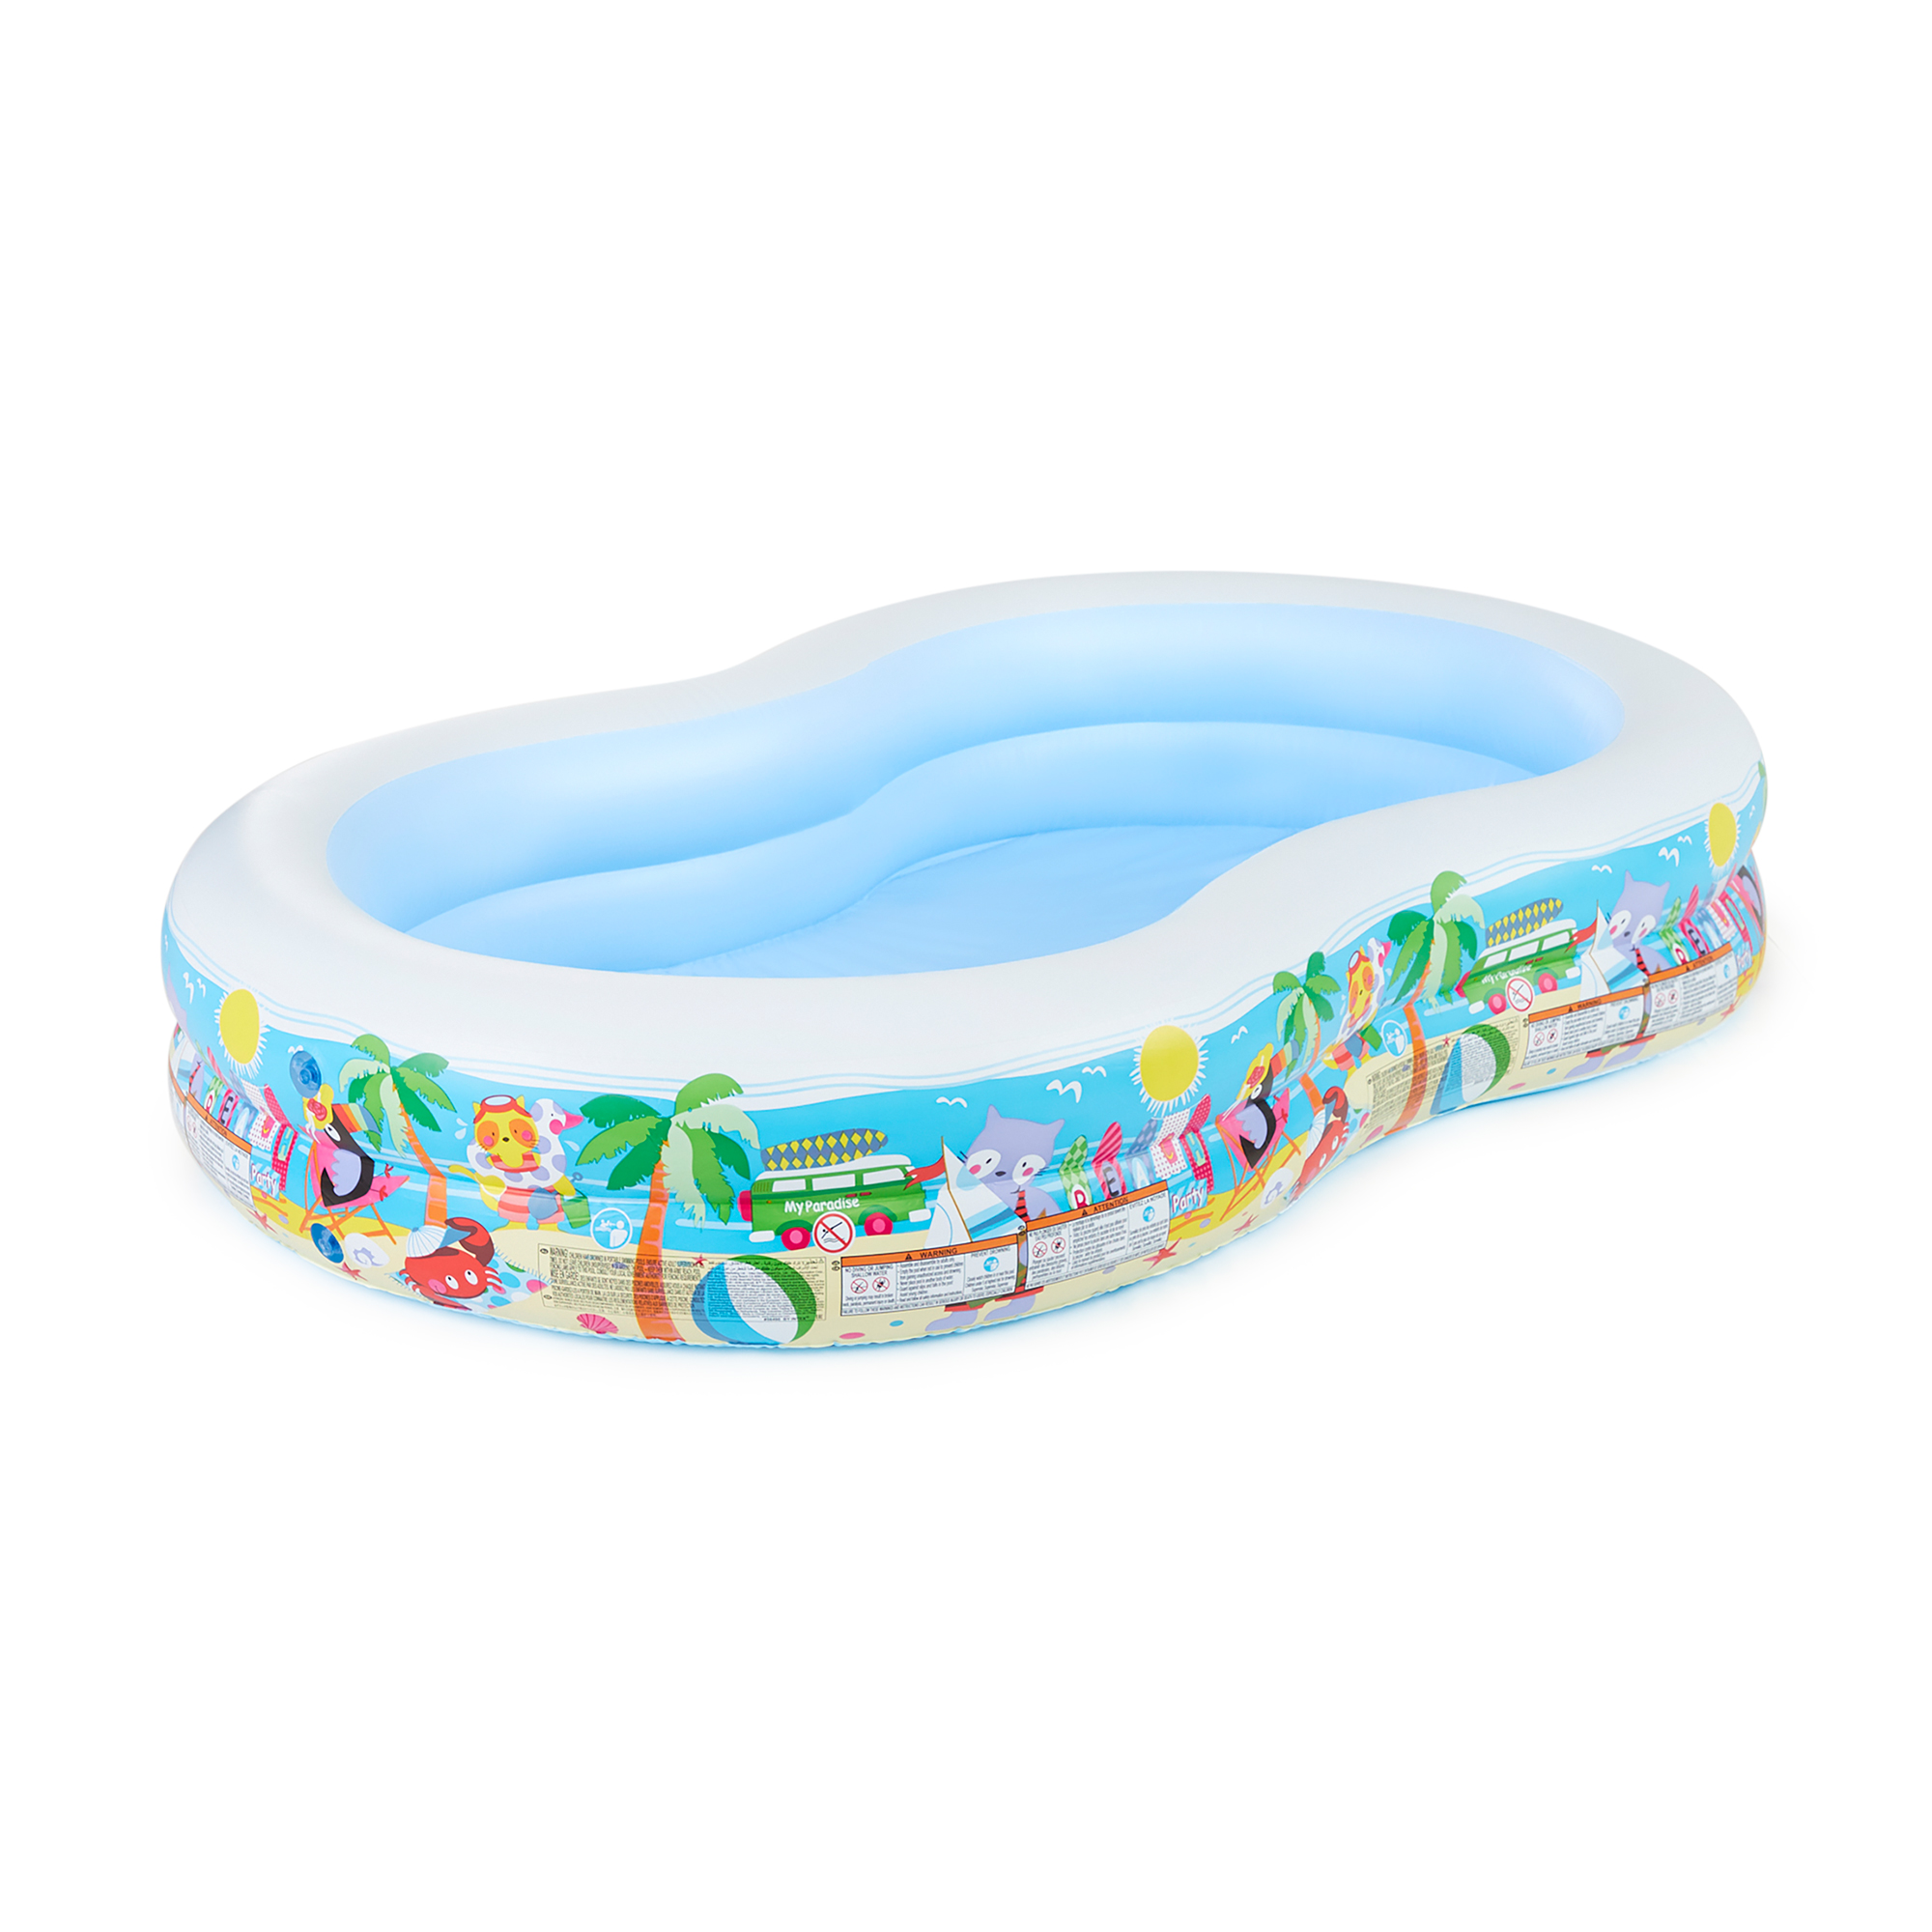 Intex 8.5ftx 5.25ft x 18in Swim Center Paradise Seaside Inflatable Kid Pool - image 1 of 7